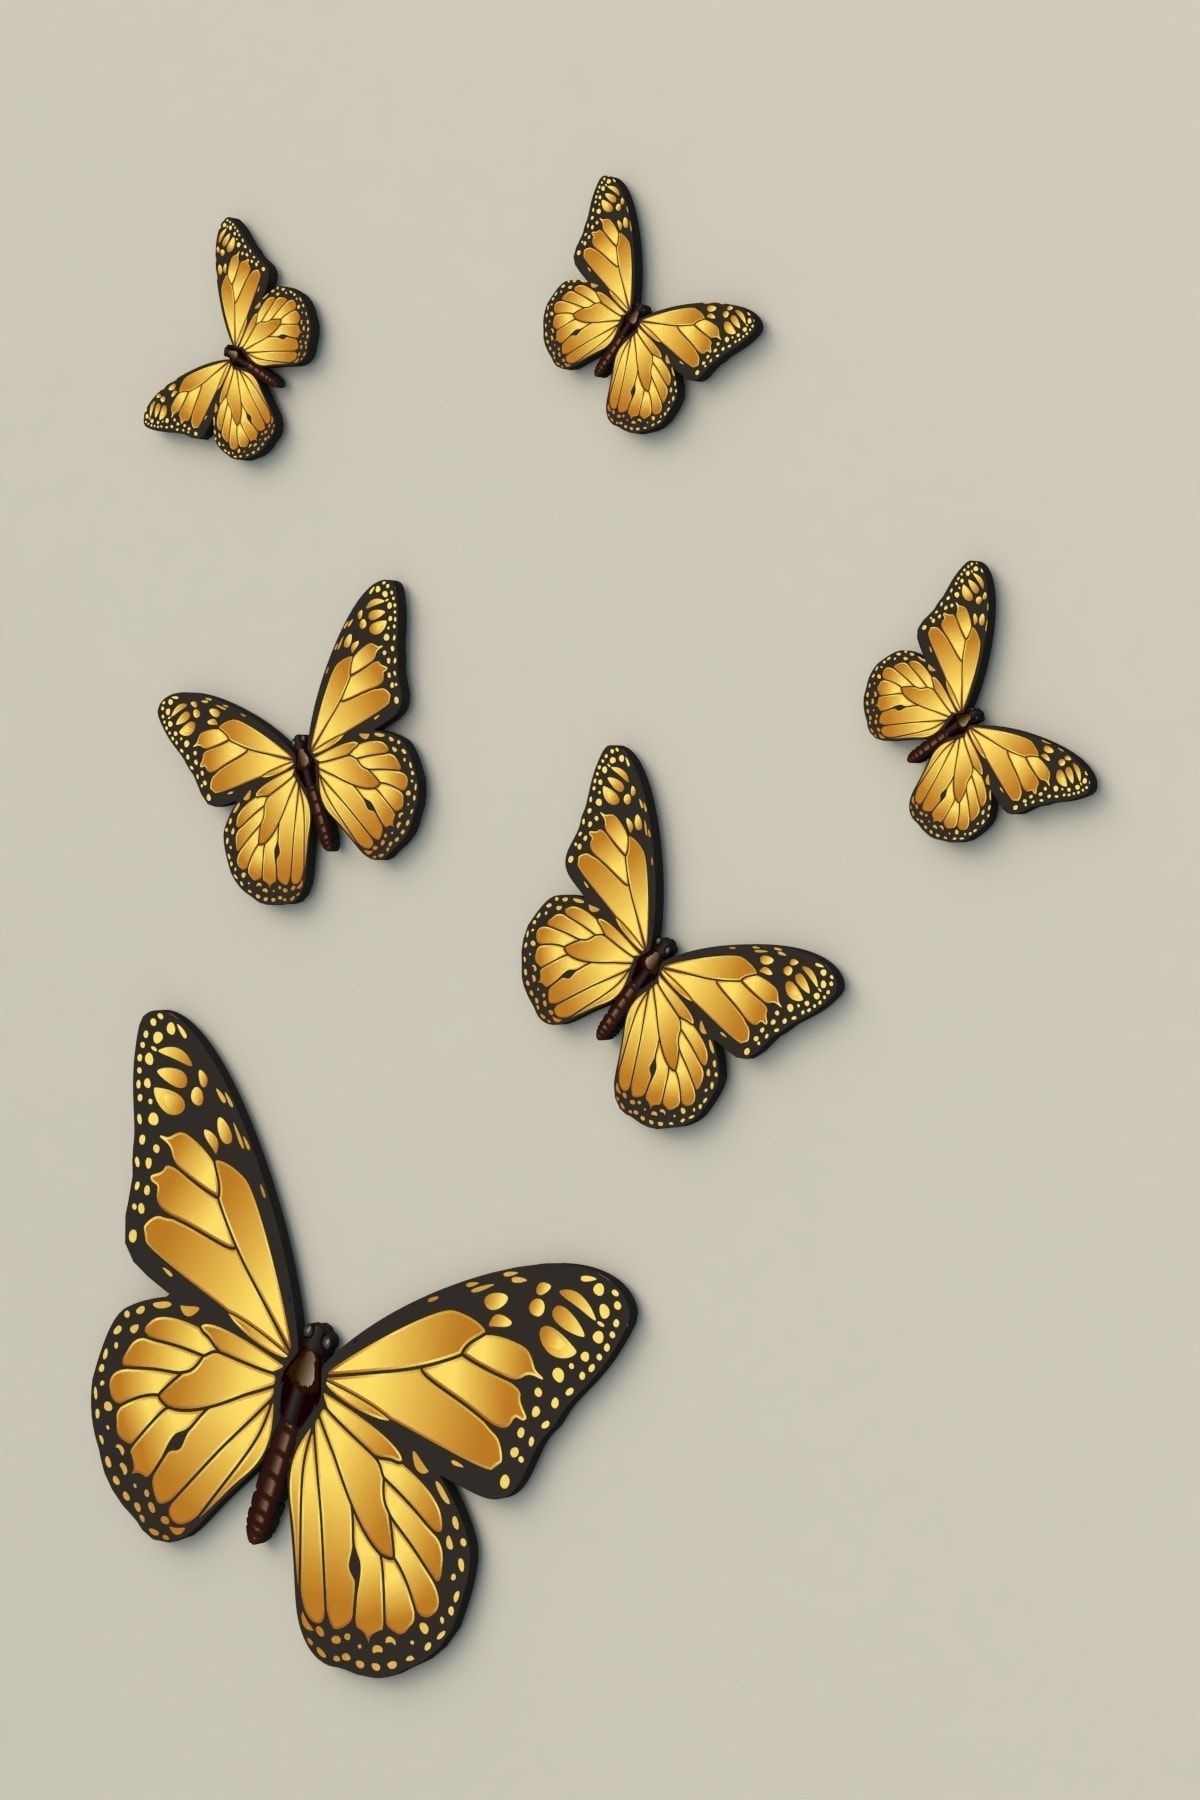 pi10reklam Dekoratif Ahşap 6lı Kelebek Duvar Süsü Altın